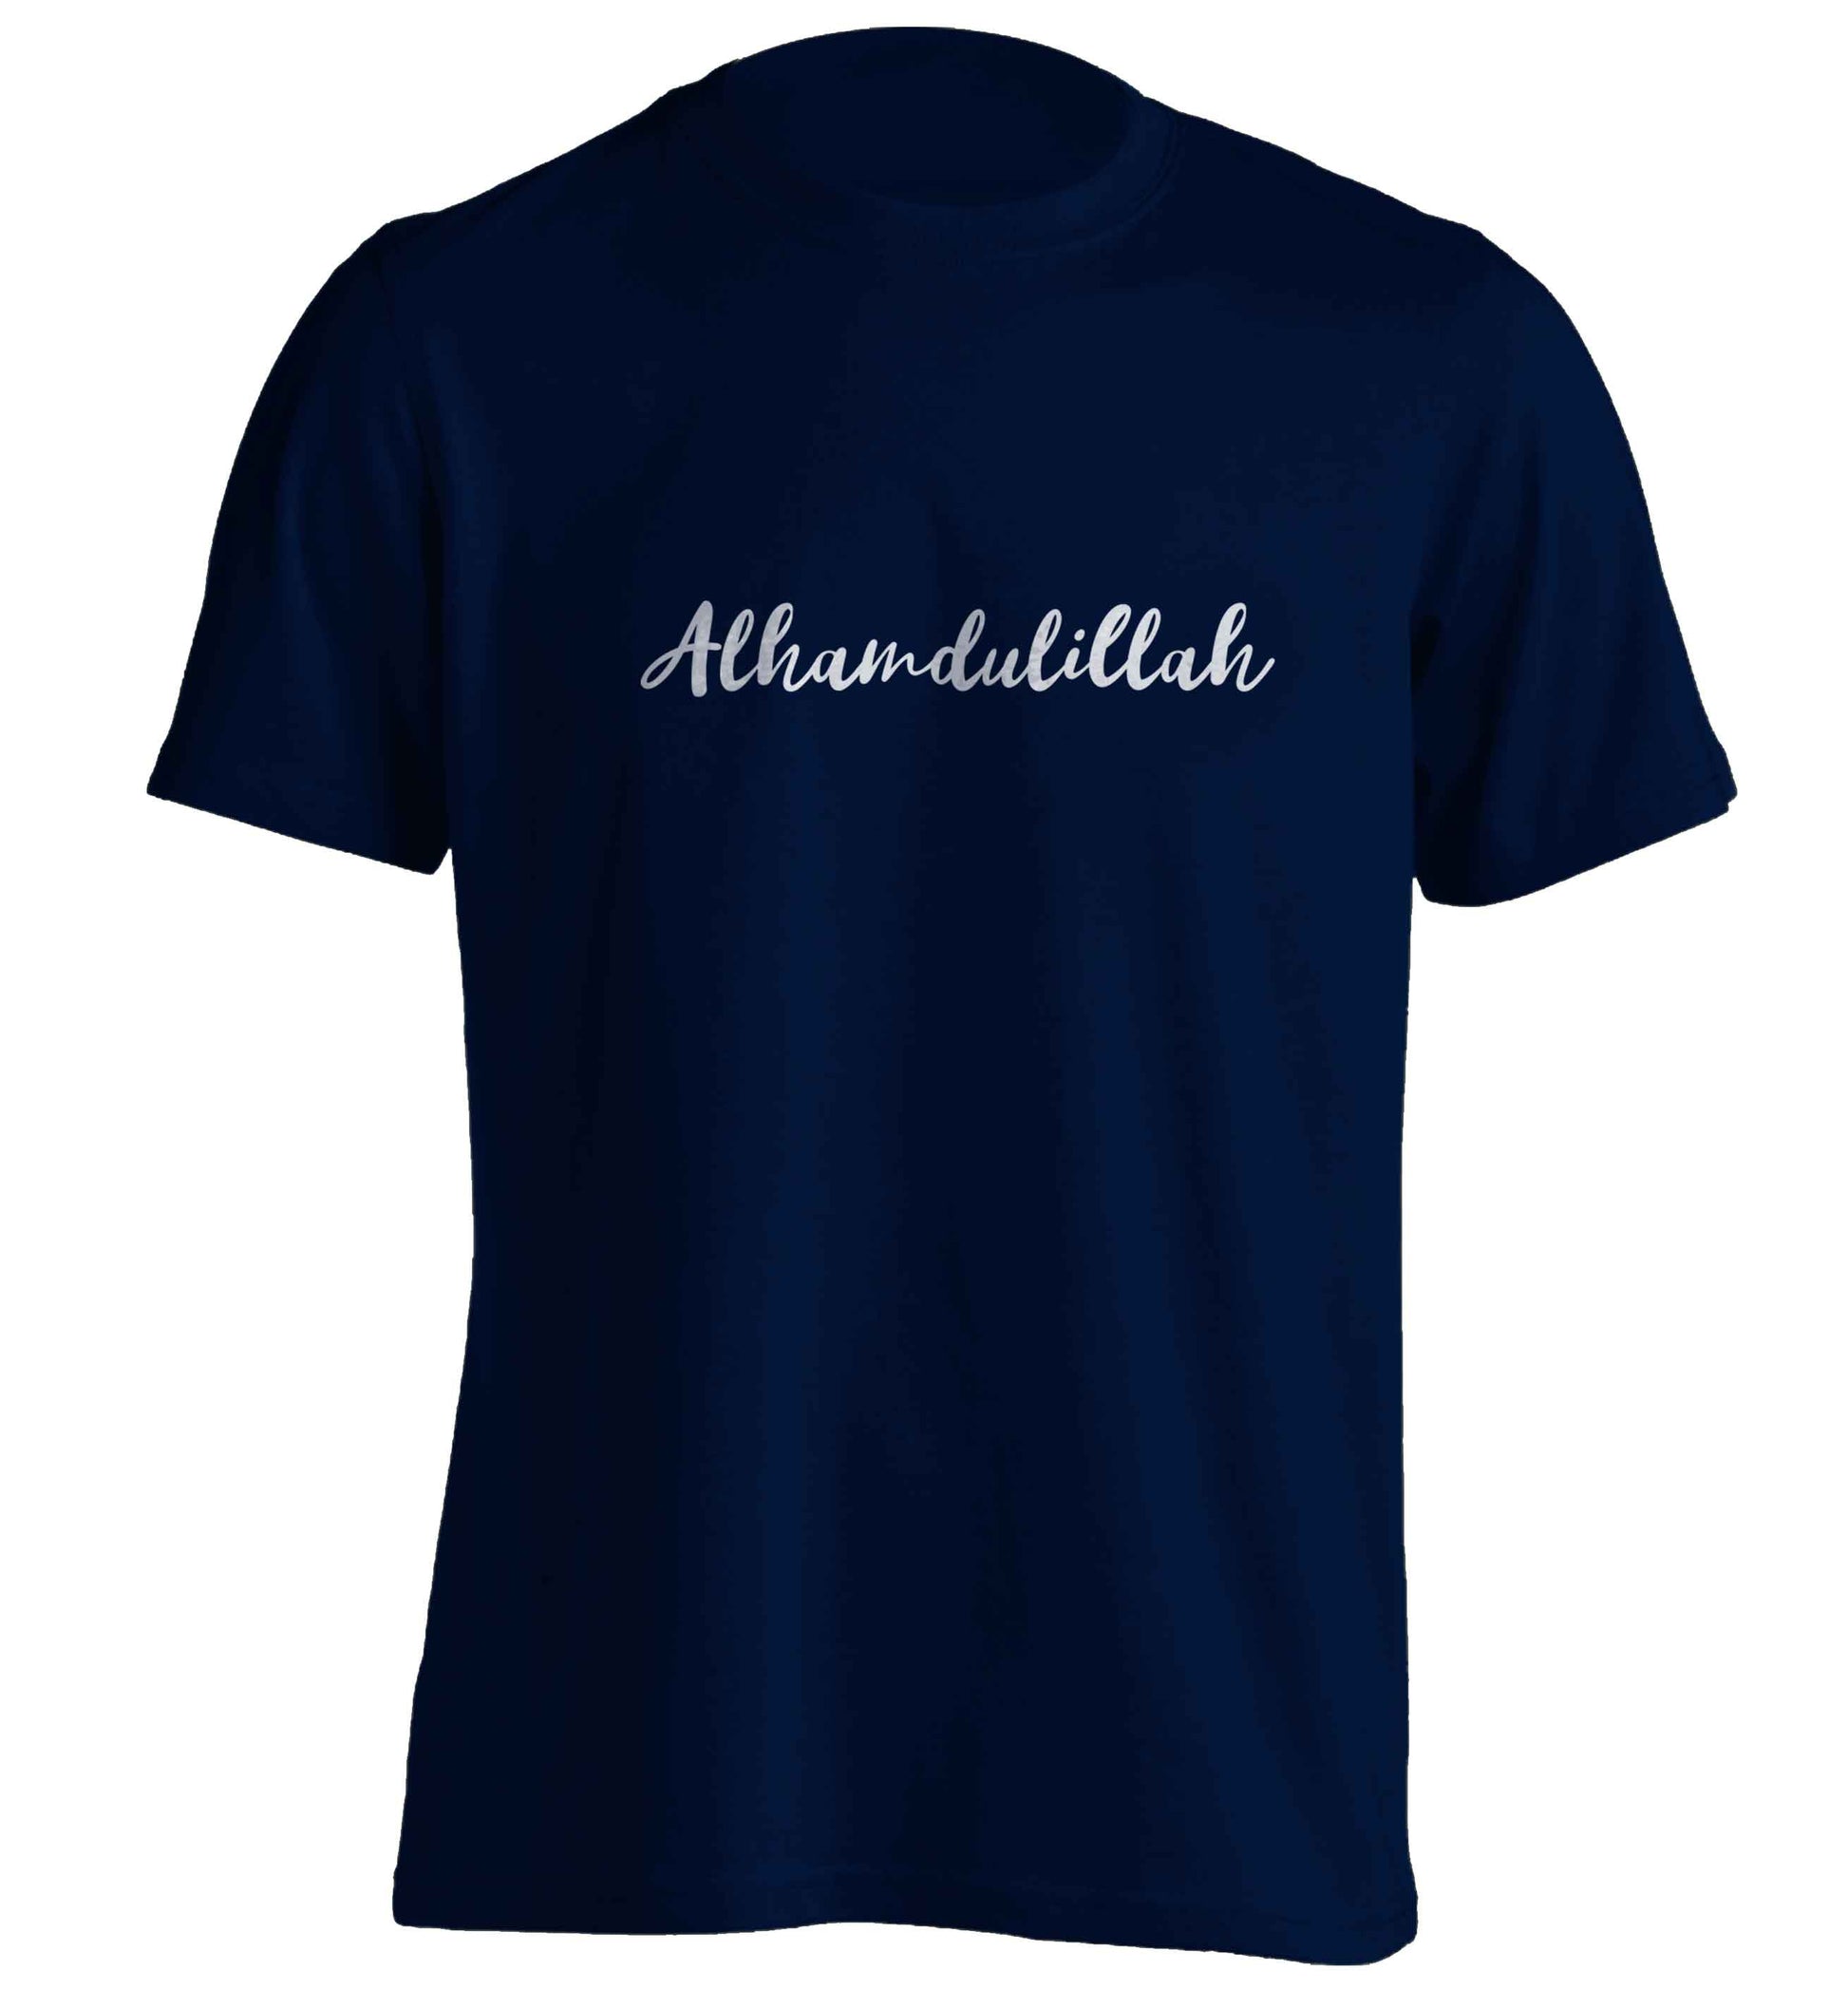 alhamdulillah adults unisex navy Tshirt 2XL